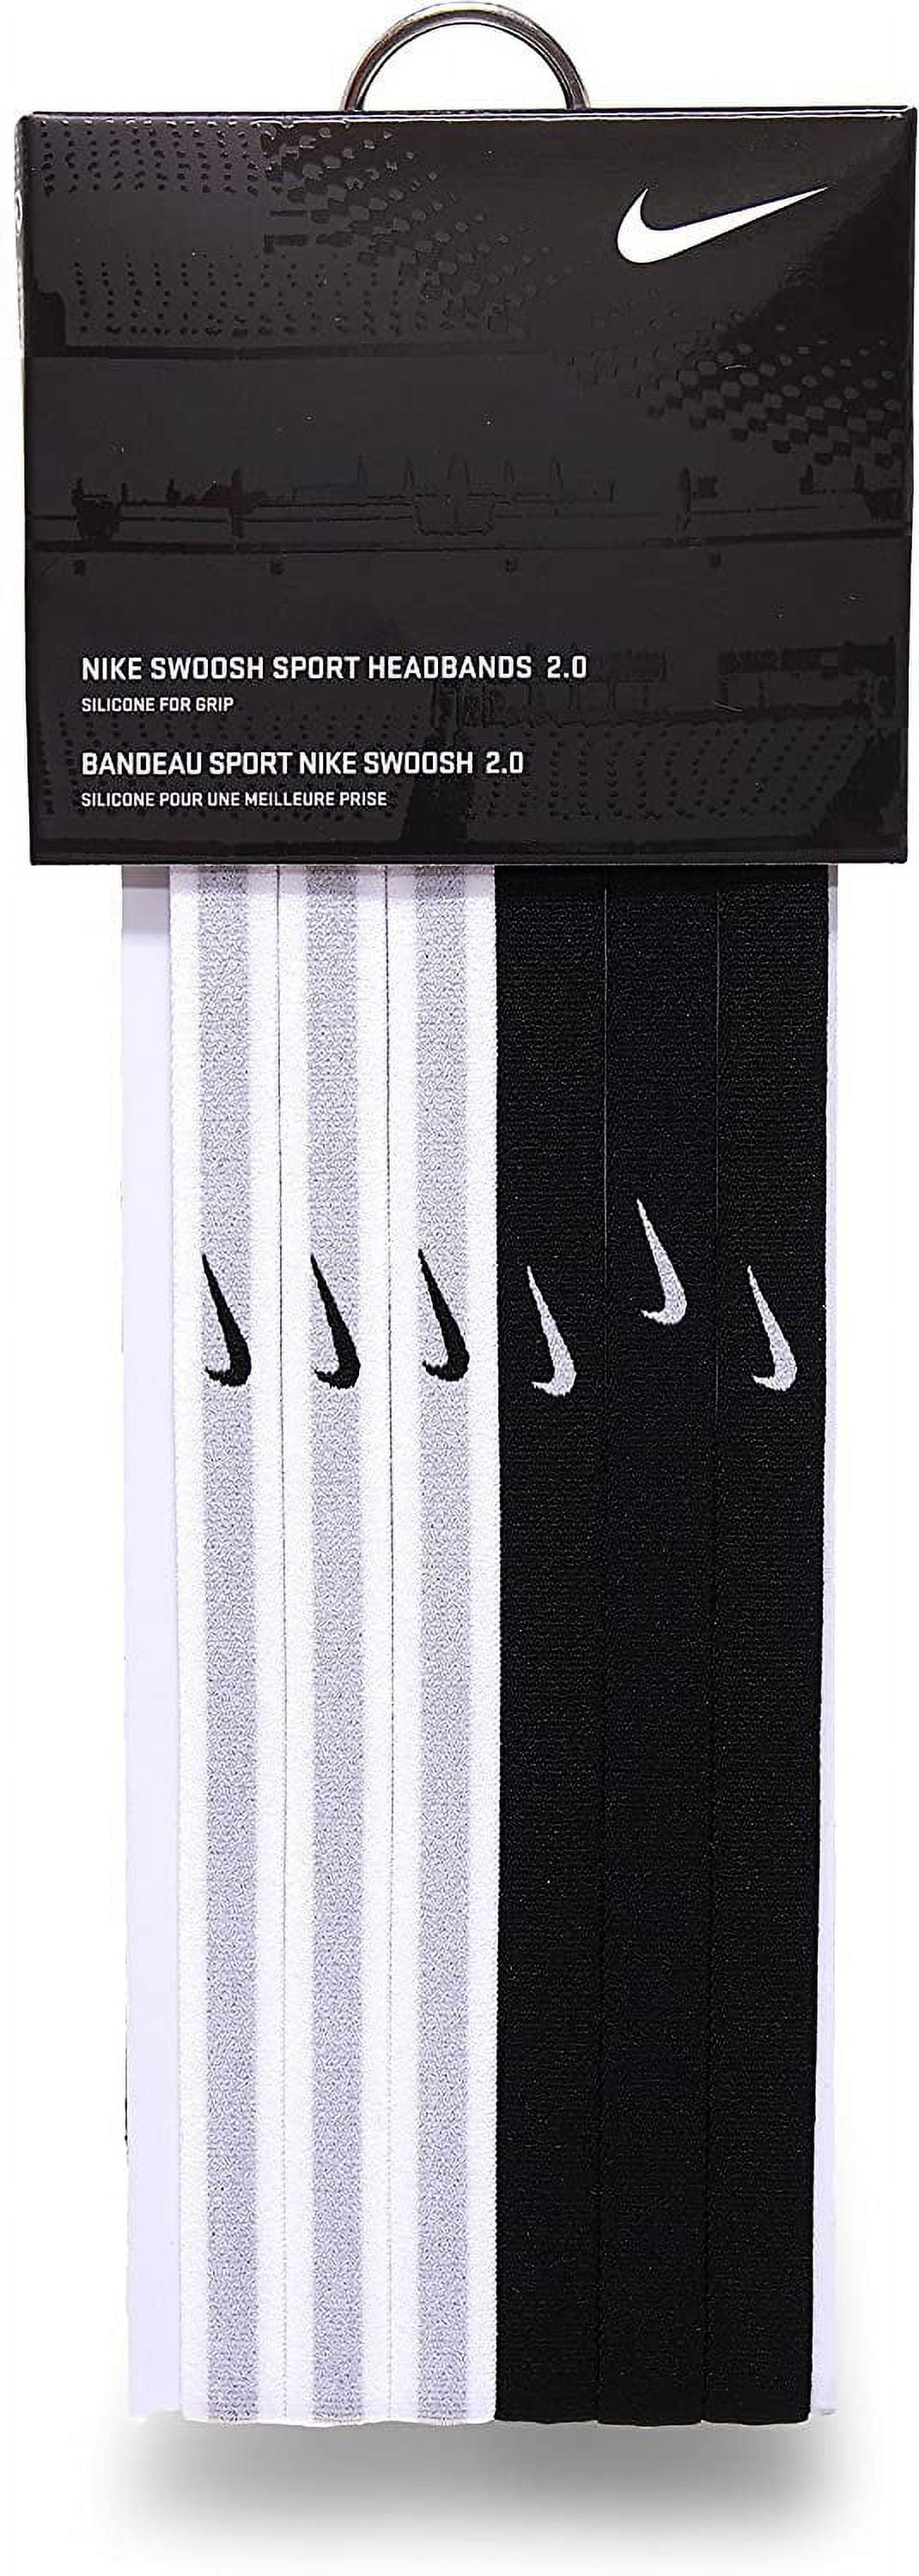 Nike Swoosh Sport Headbands 2.0 (Black/White/Grey) 